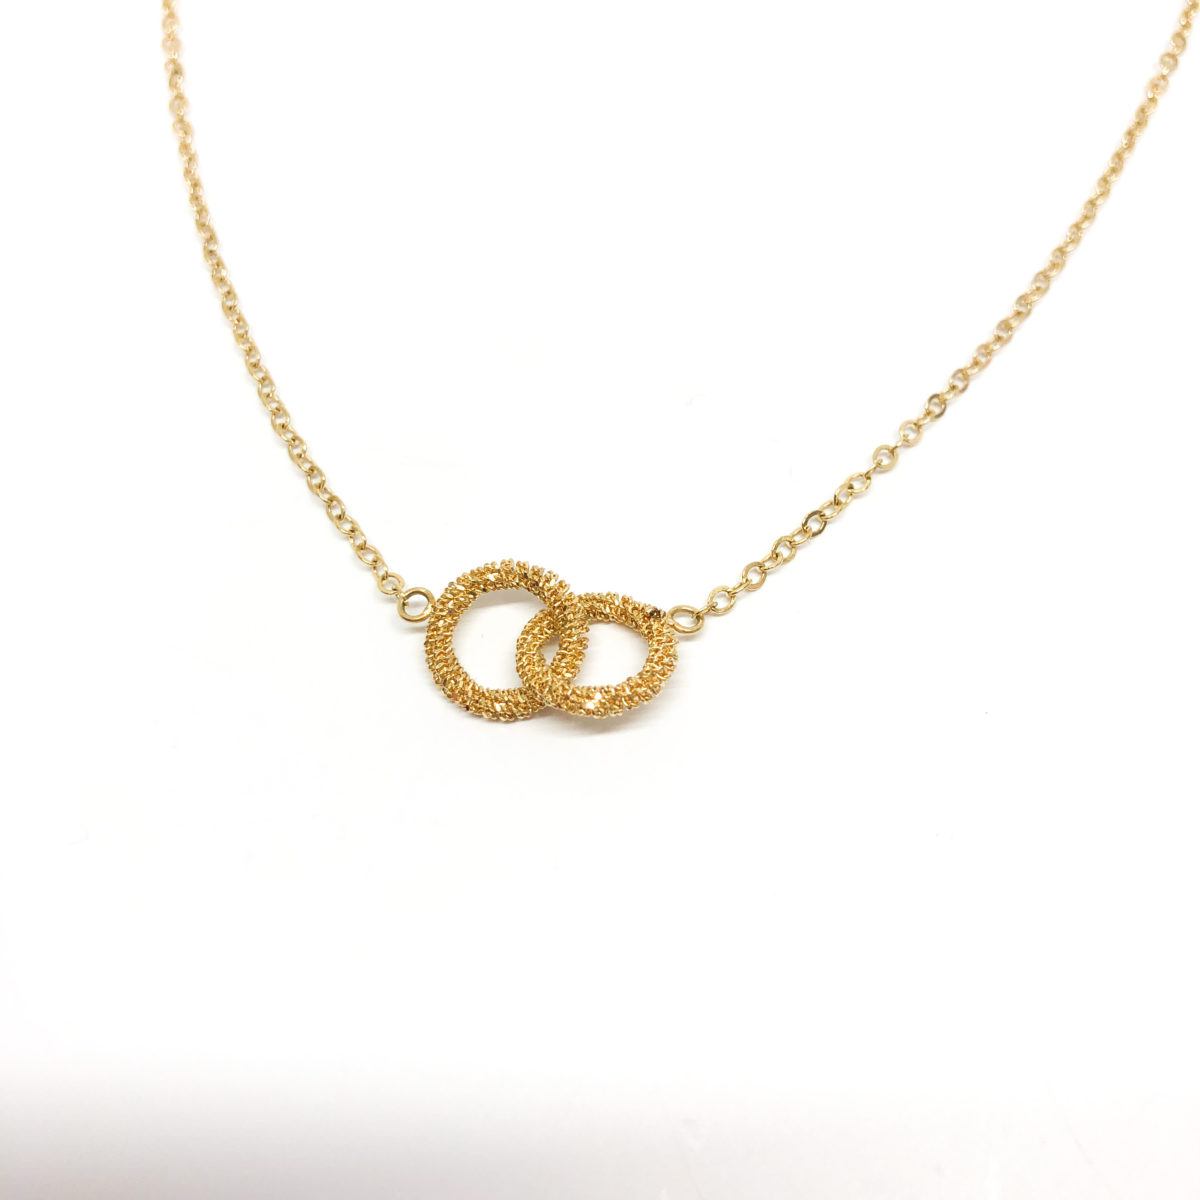 Small 18k Interlocking Circle Necklace